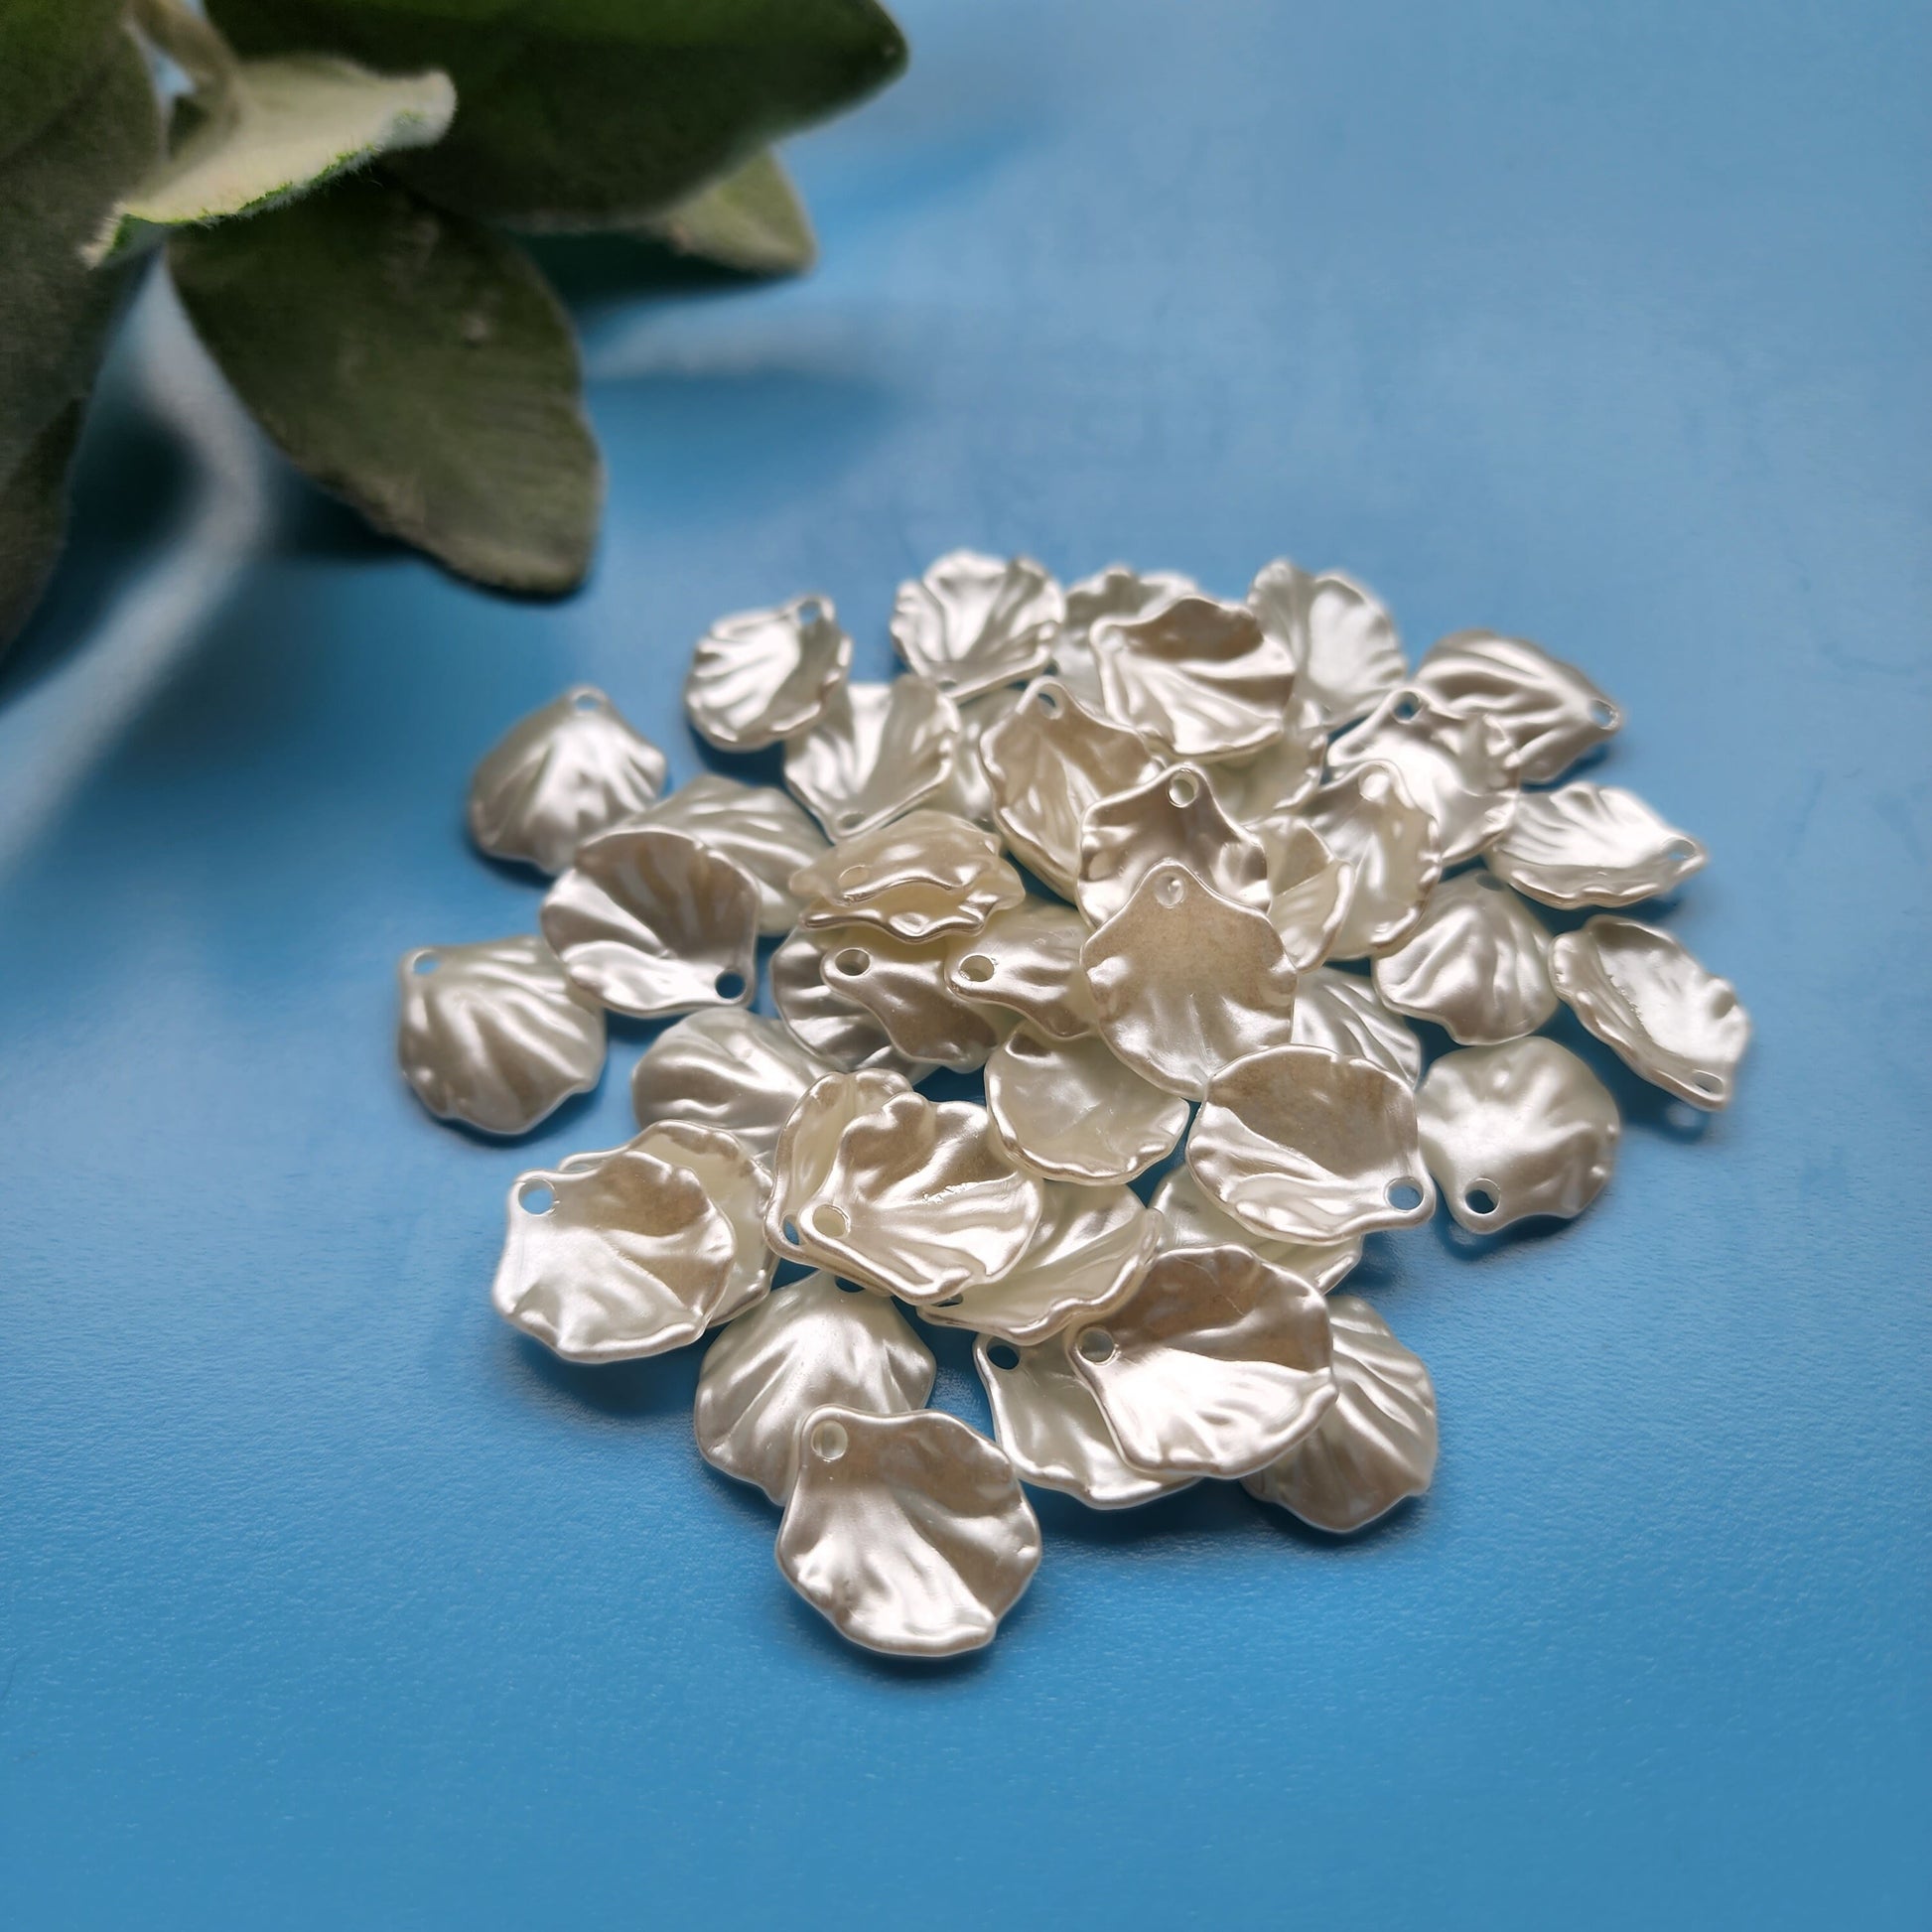 40 pcs Faux pearl petals charms Earrings components Earrings findings DIY jewelry